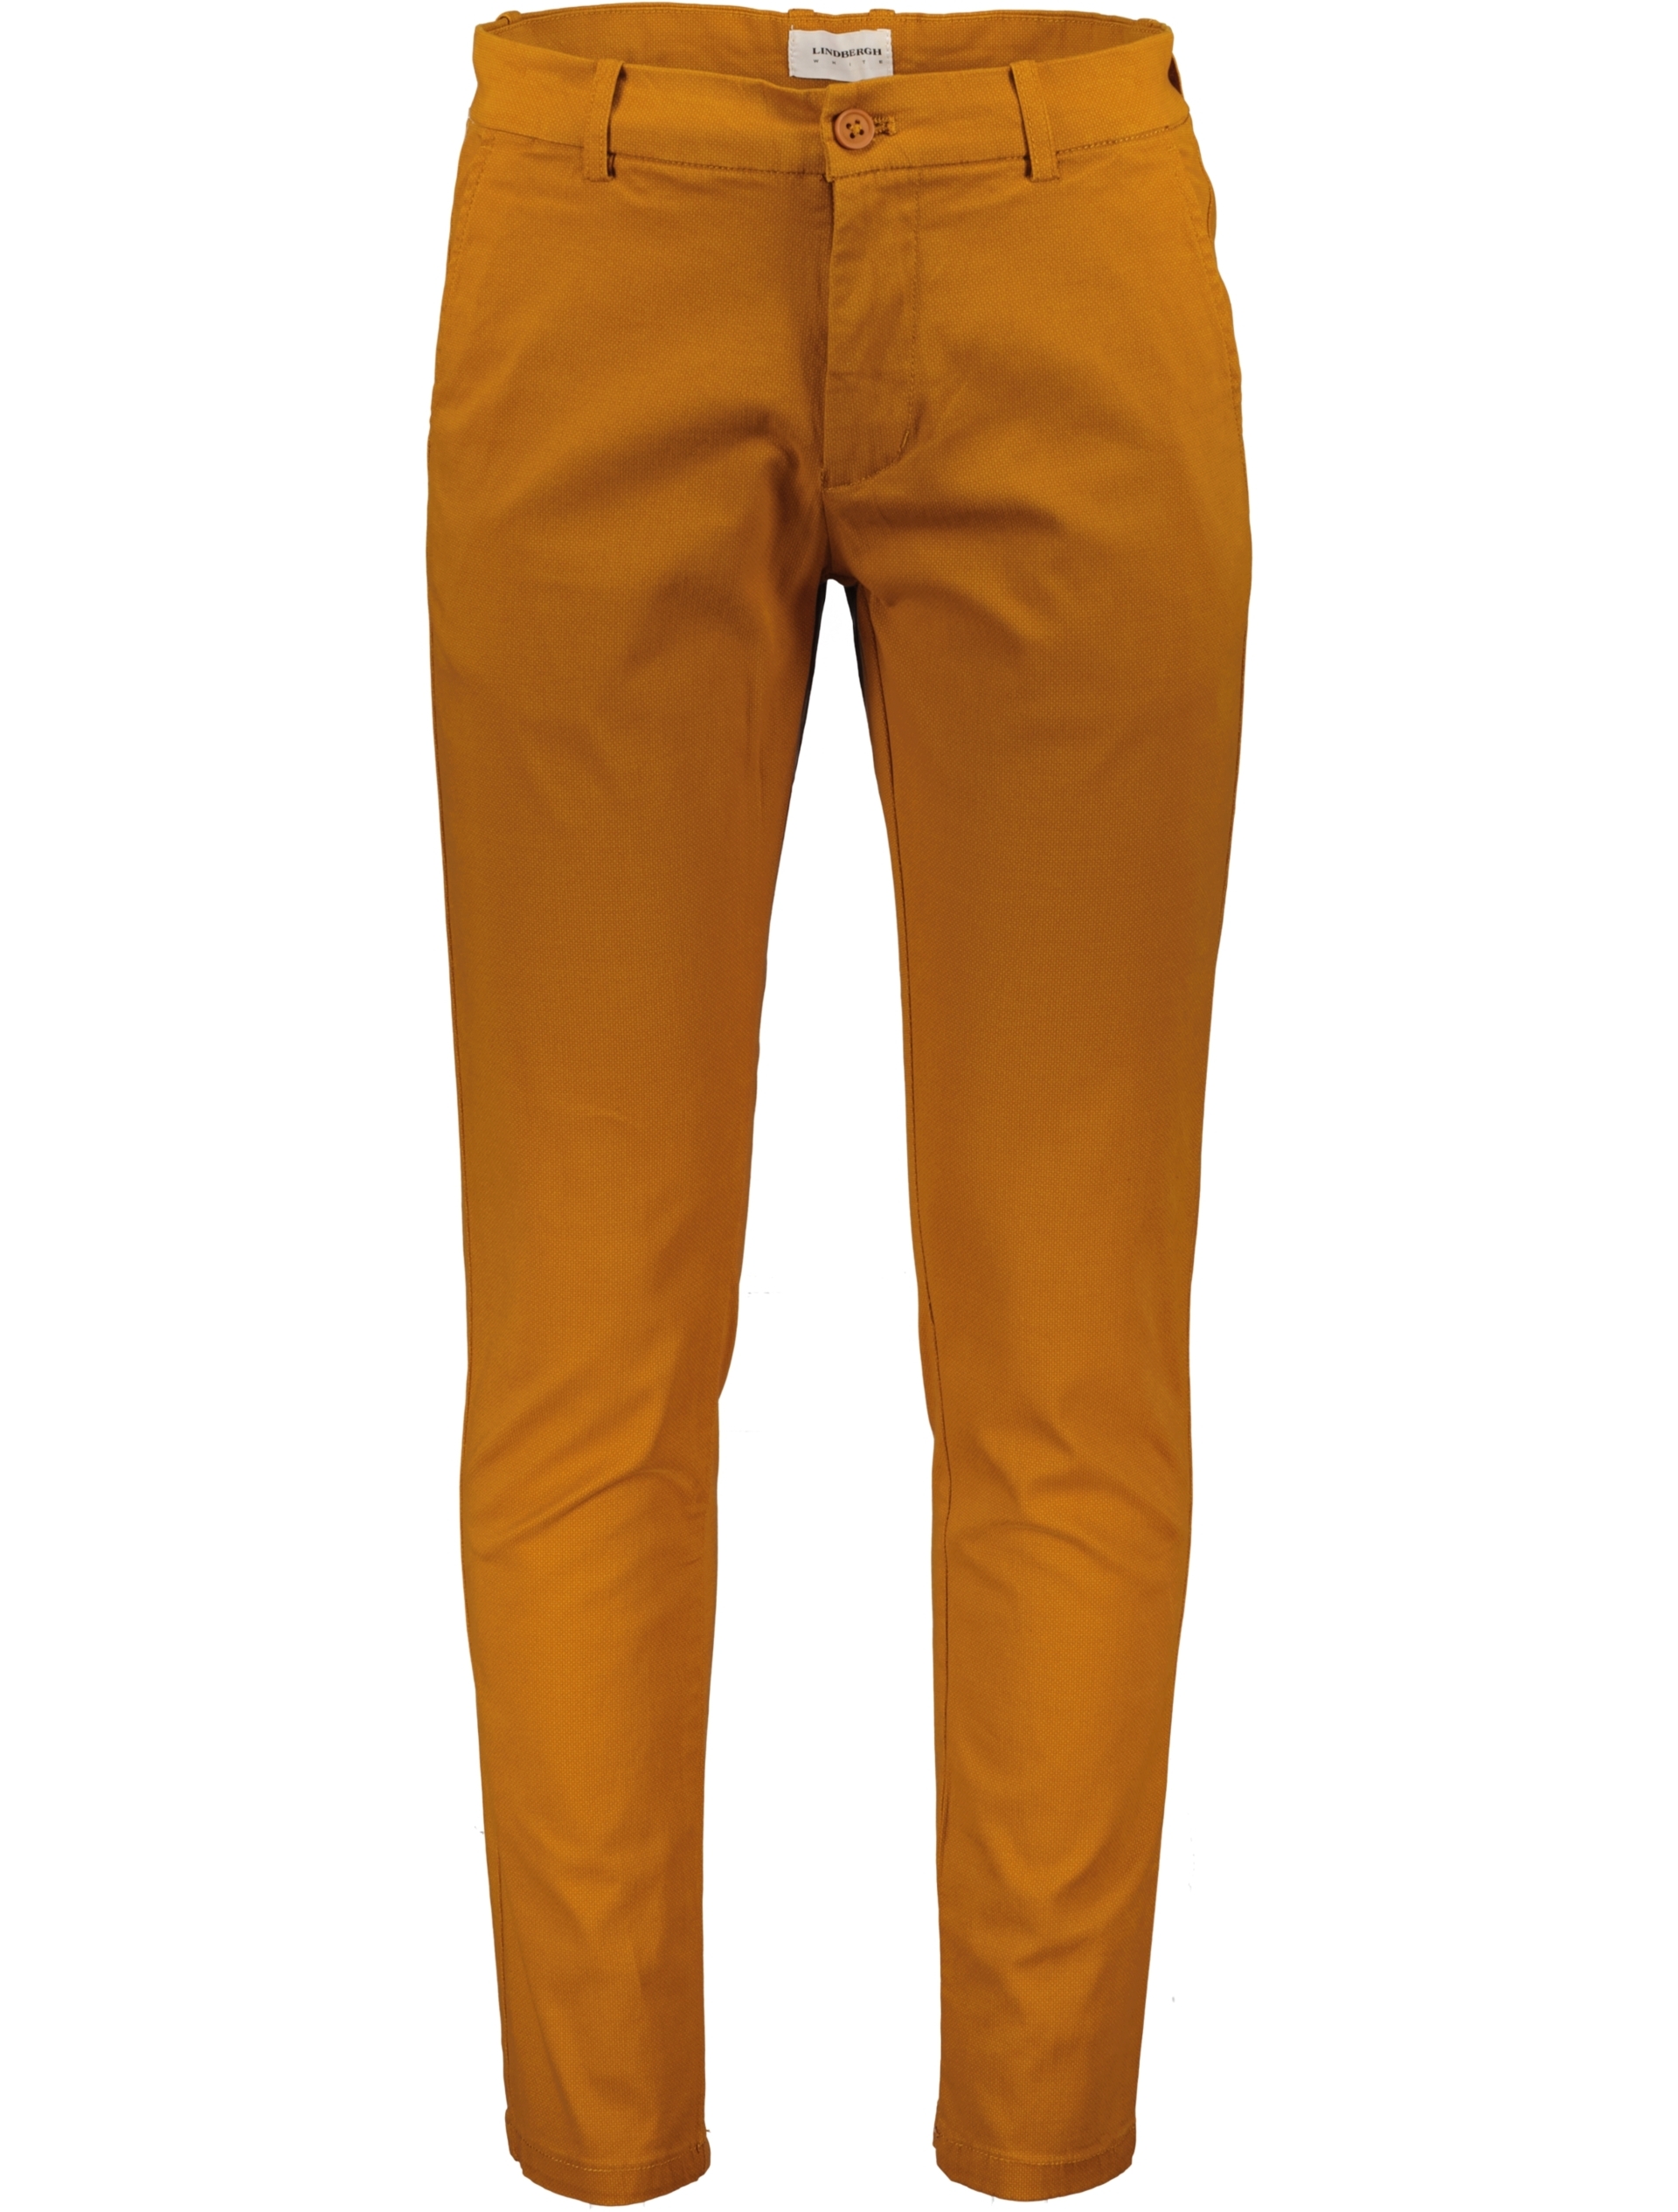 Lindbergh Chino oranje / burnt orange